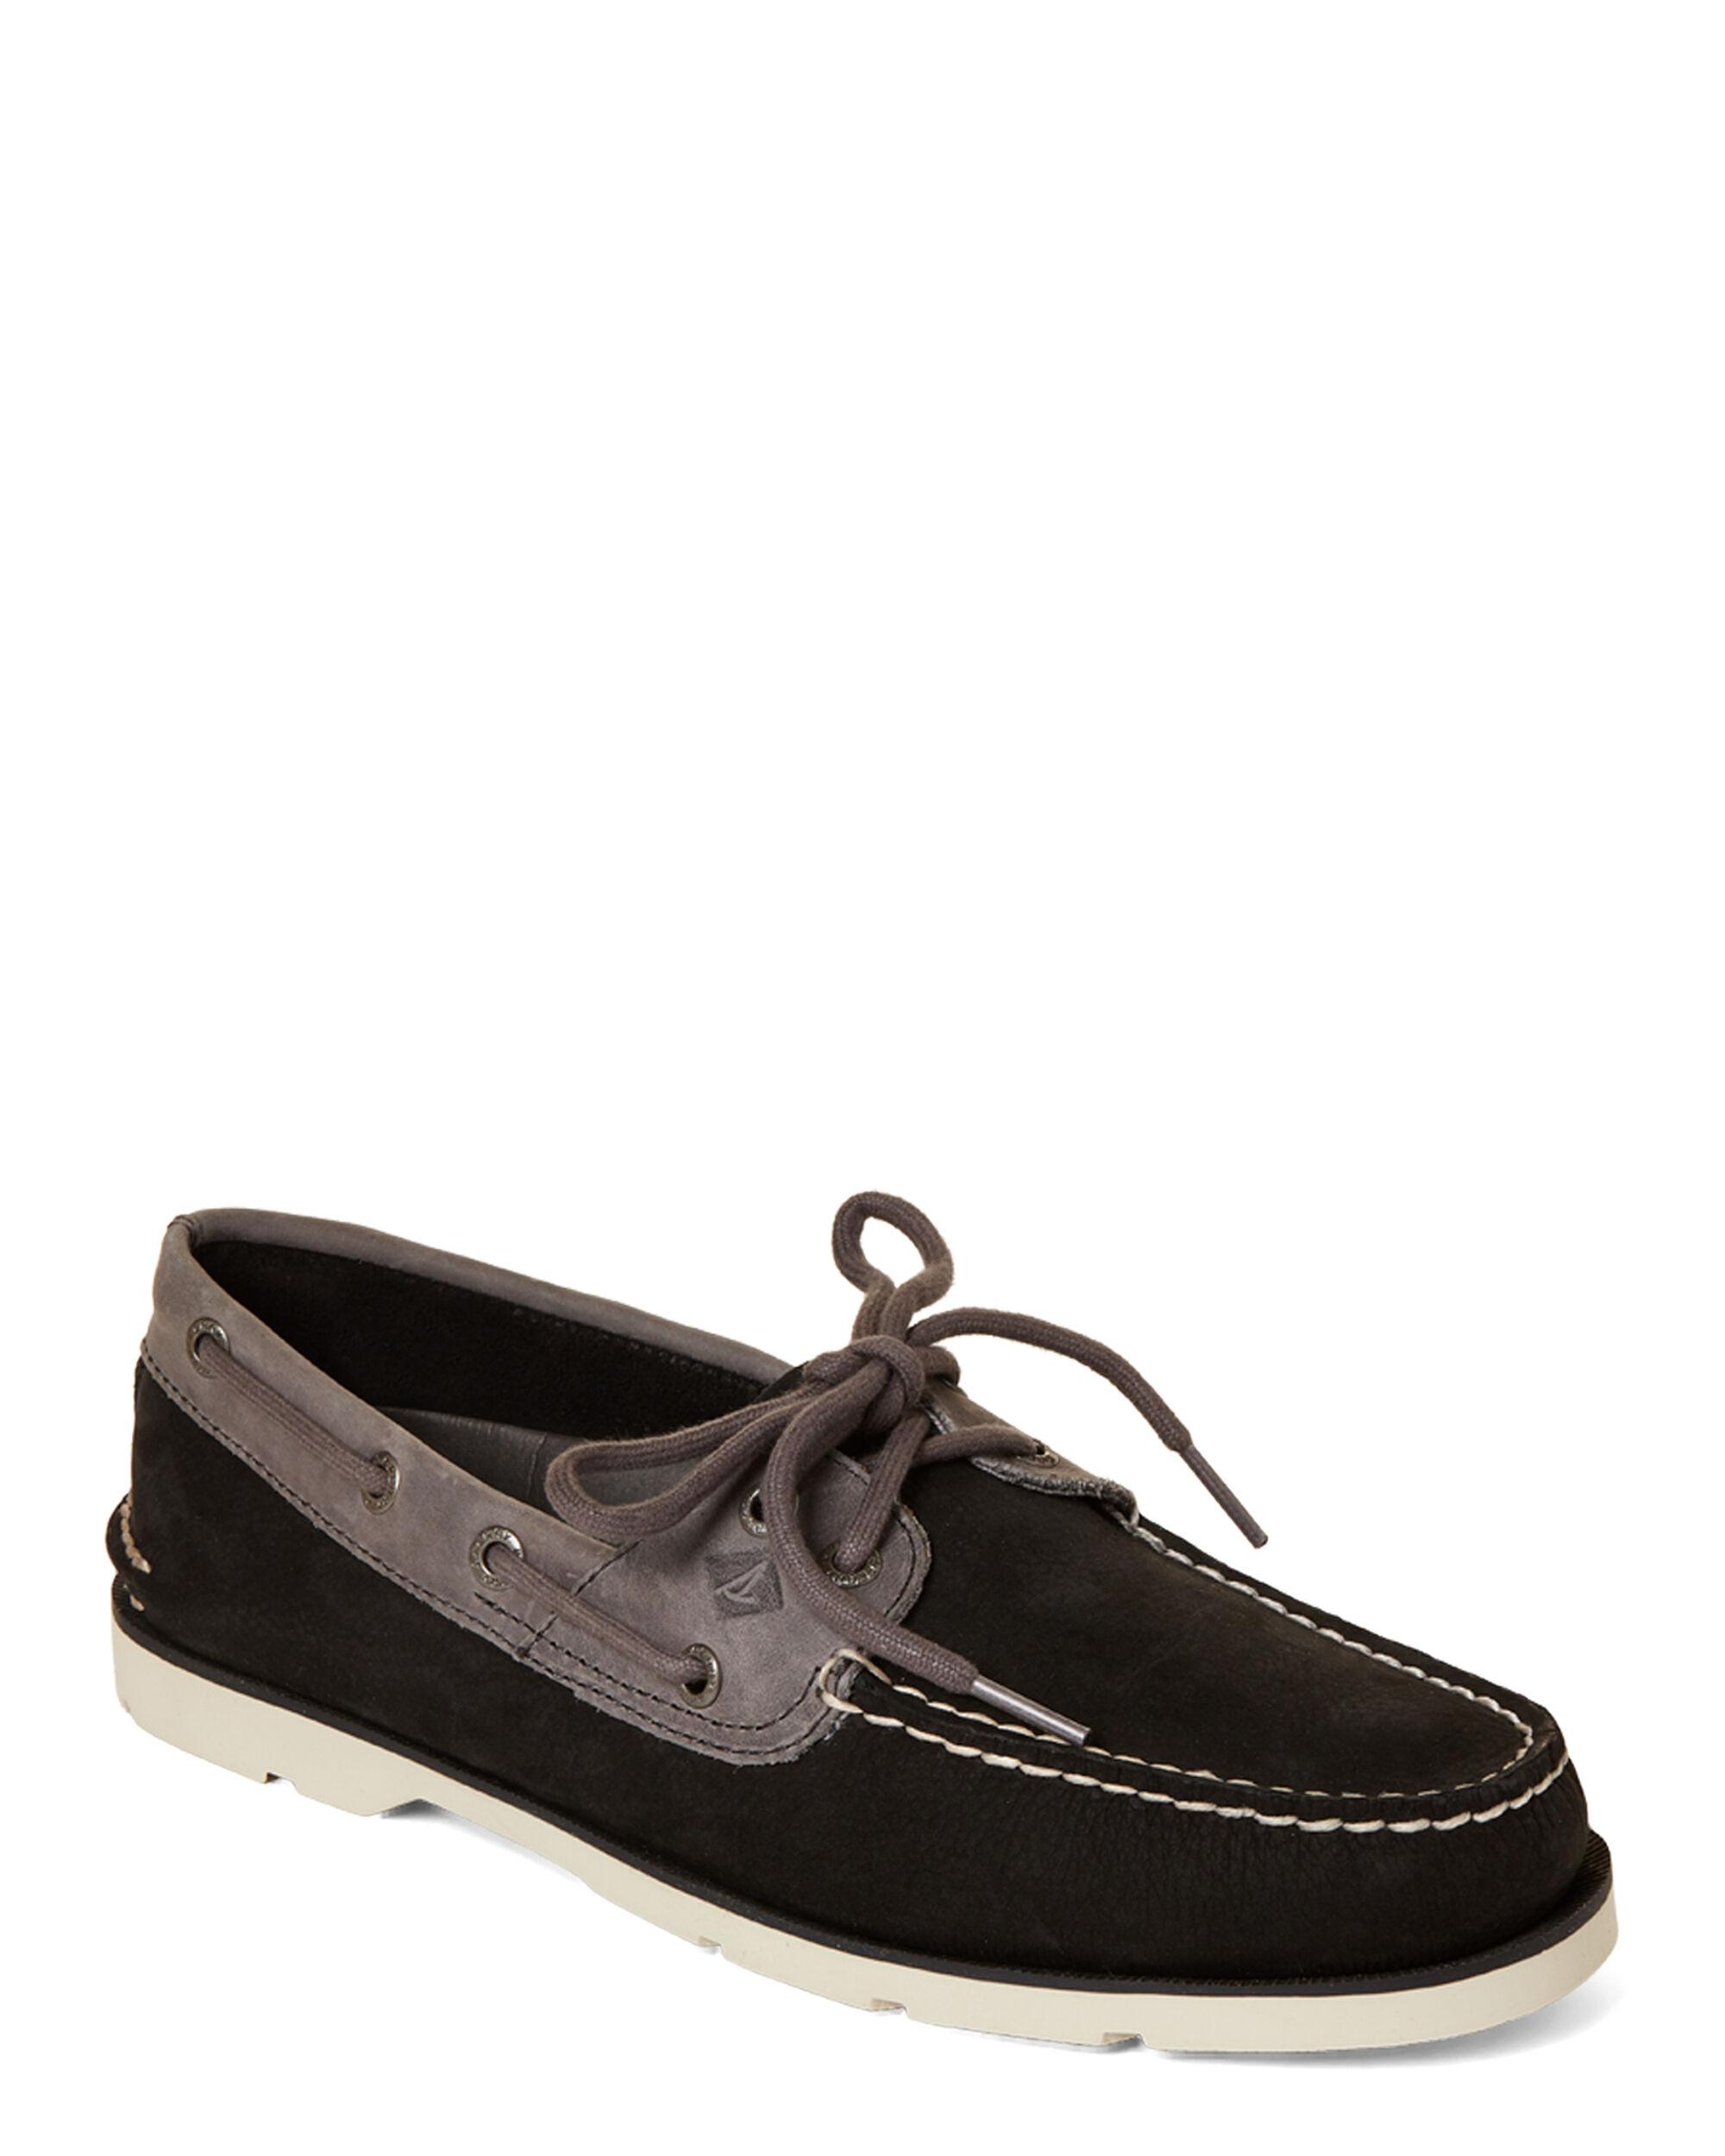 Sperry Top-Sider Black Leeward Nubuck Boat Shoes in Black for Men - Lyst